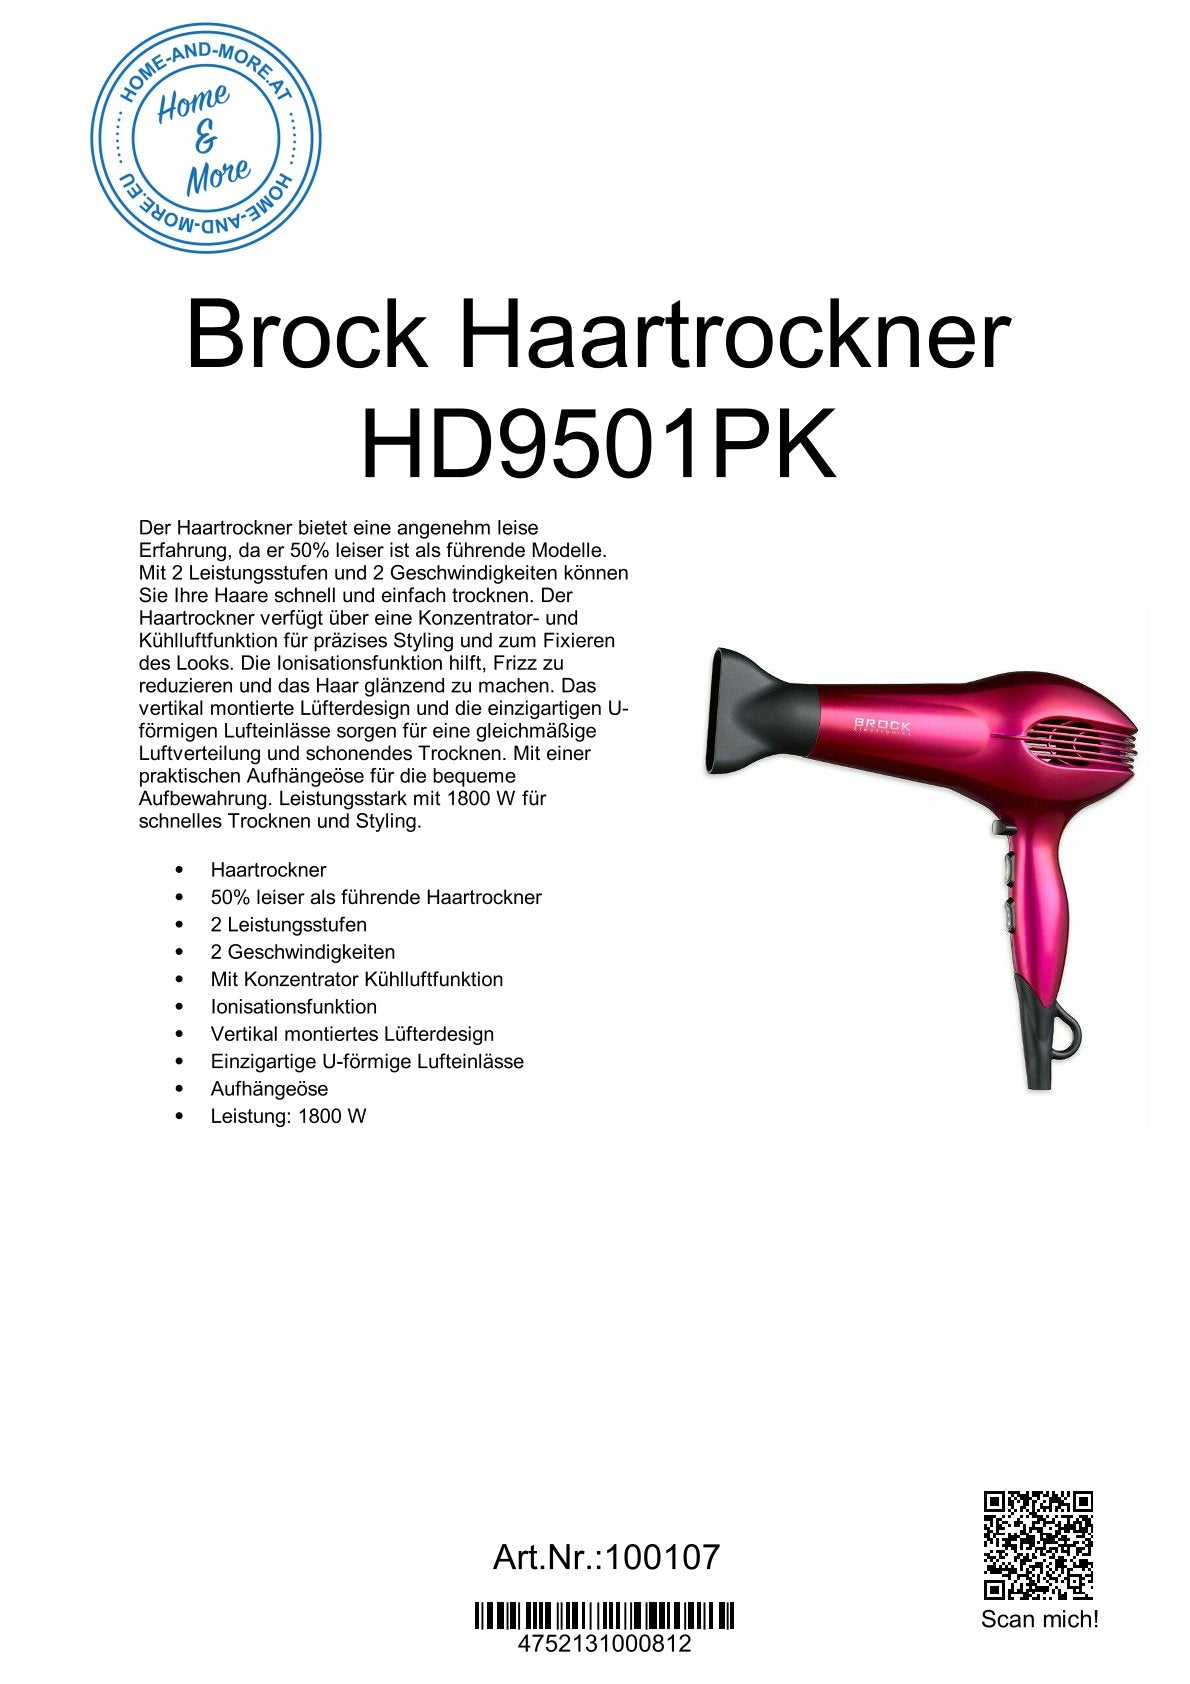 Brock Haartrockner HD9501PK